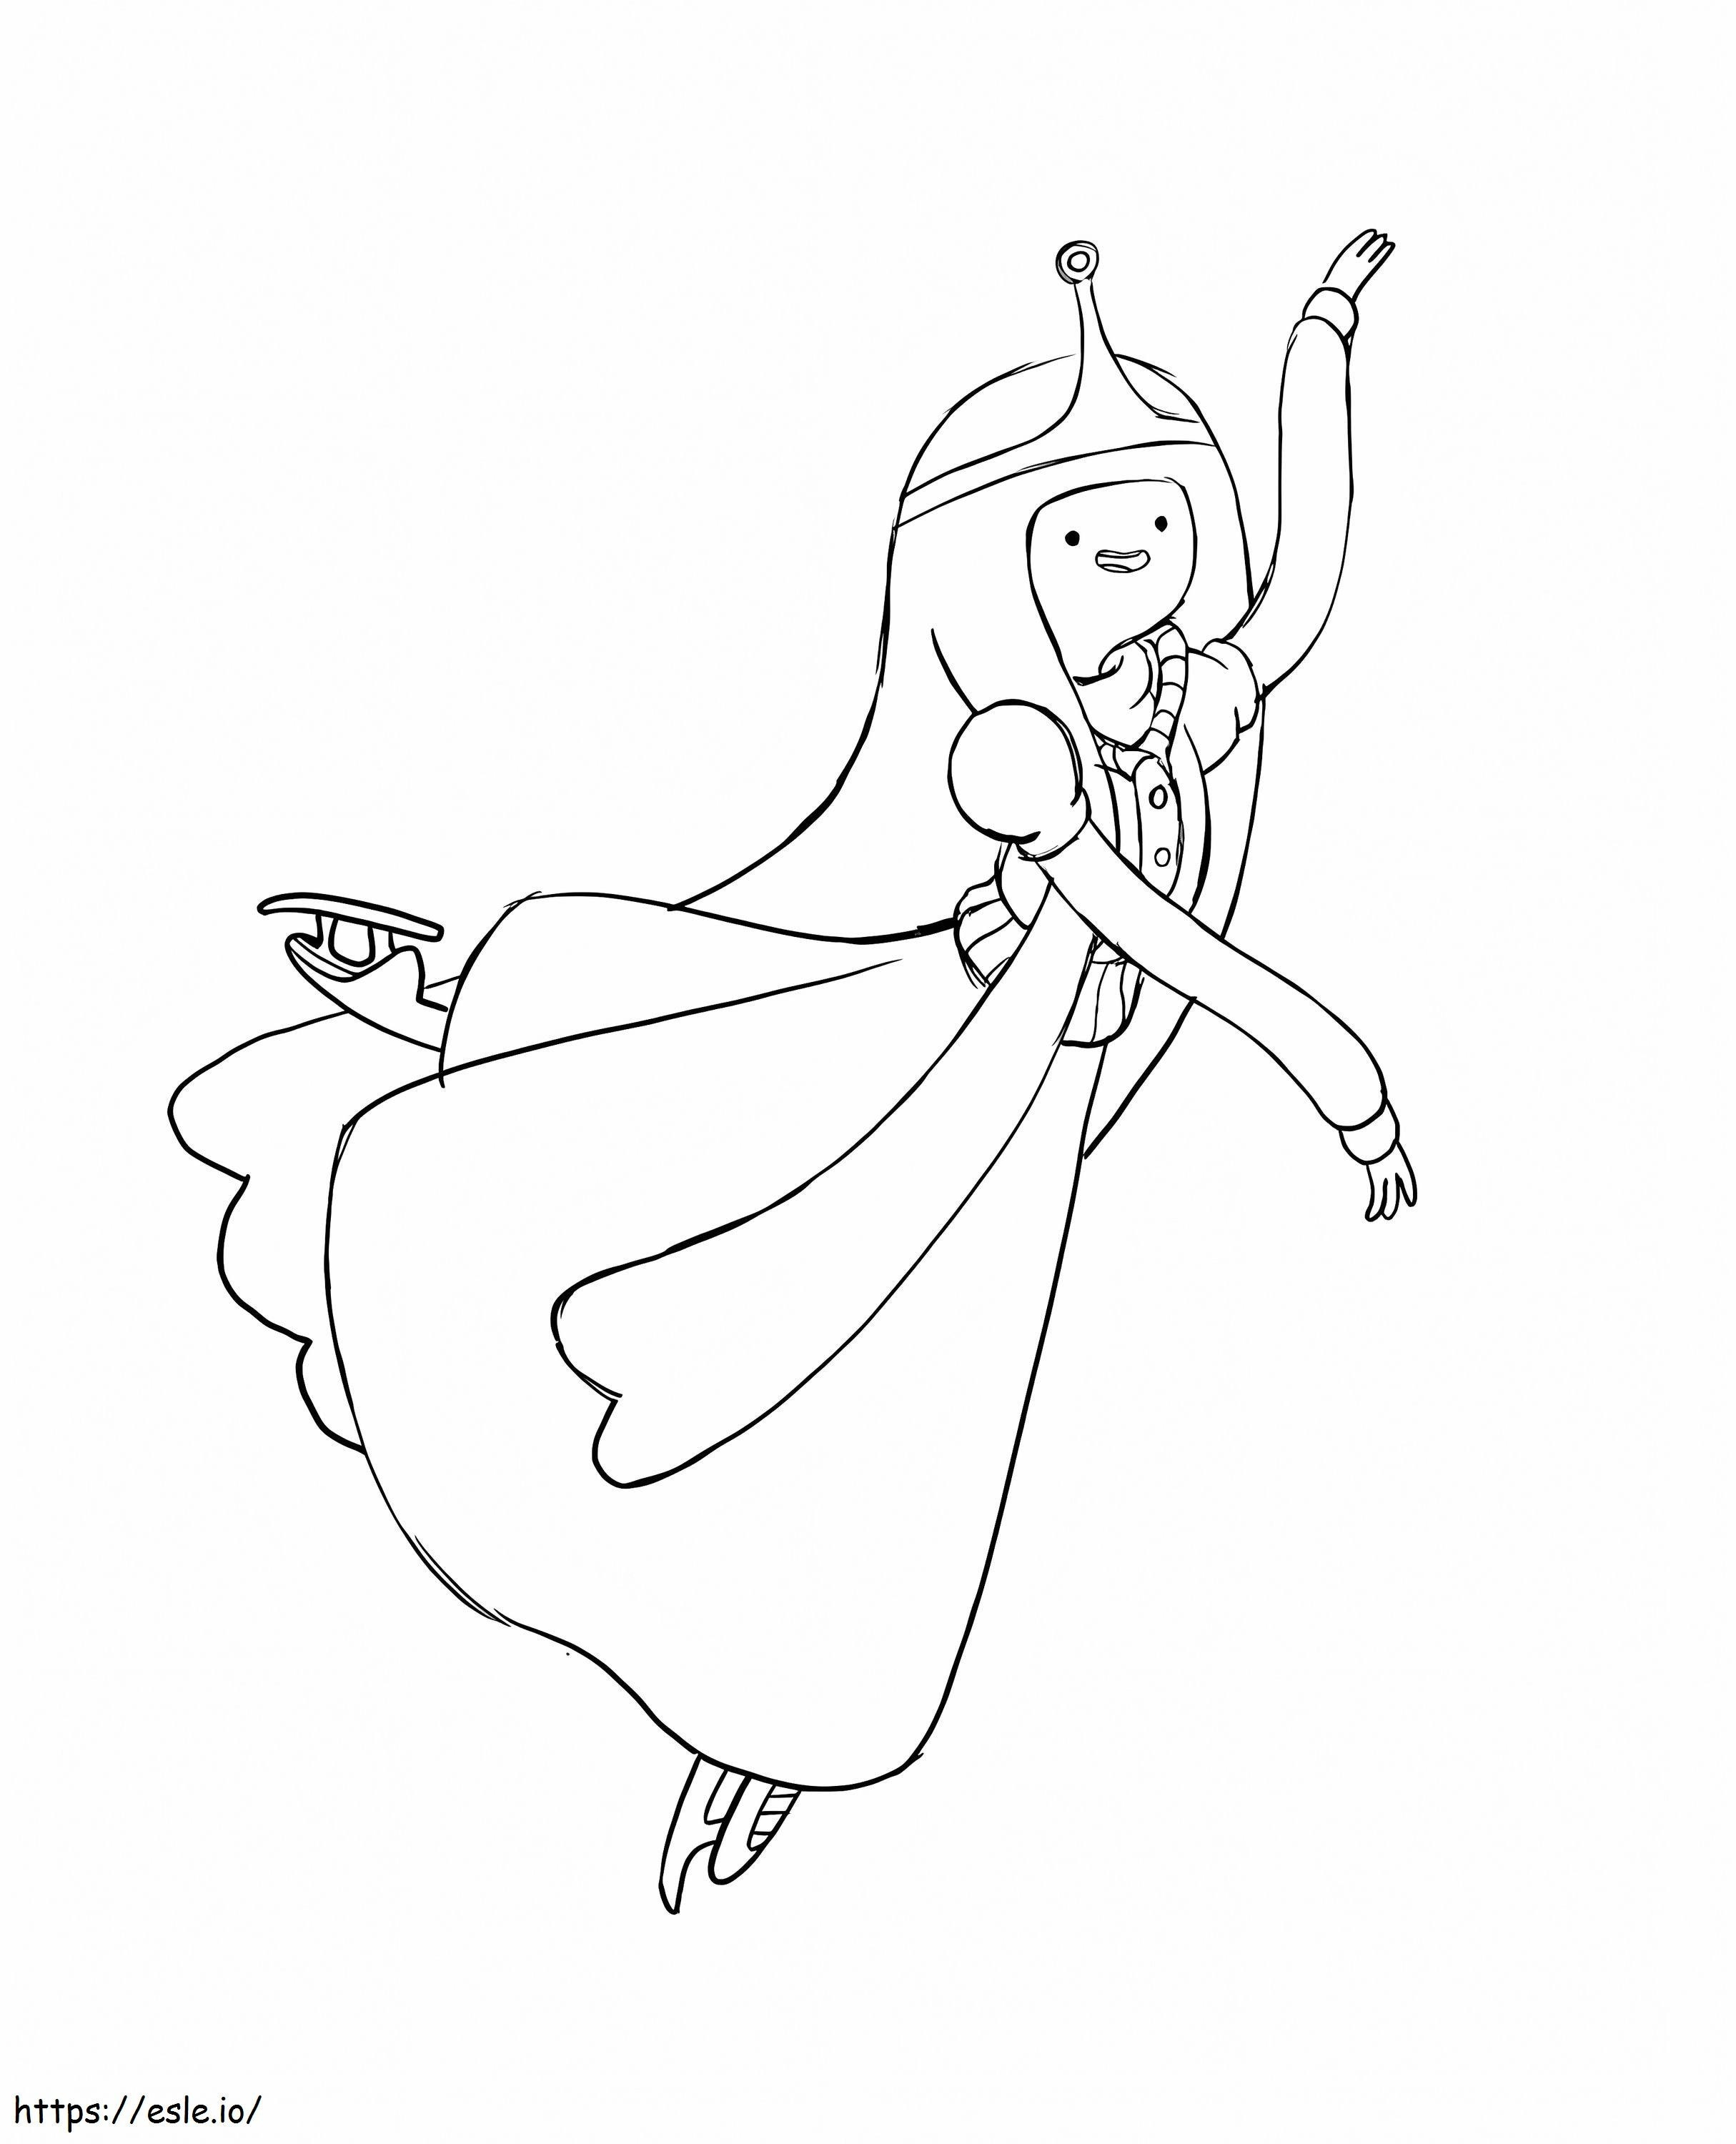 Princess Bubblegum Dancing coloring page